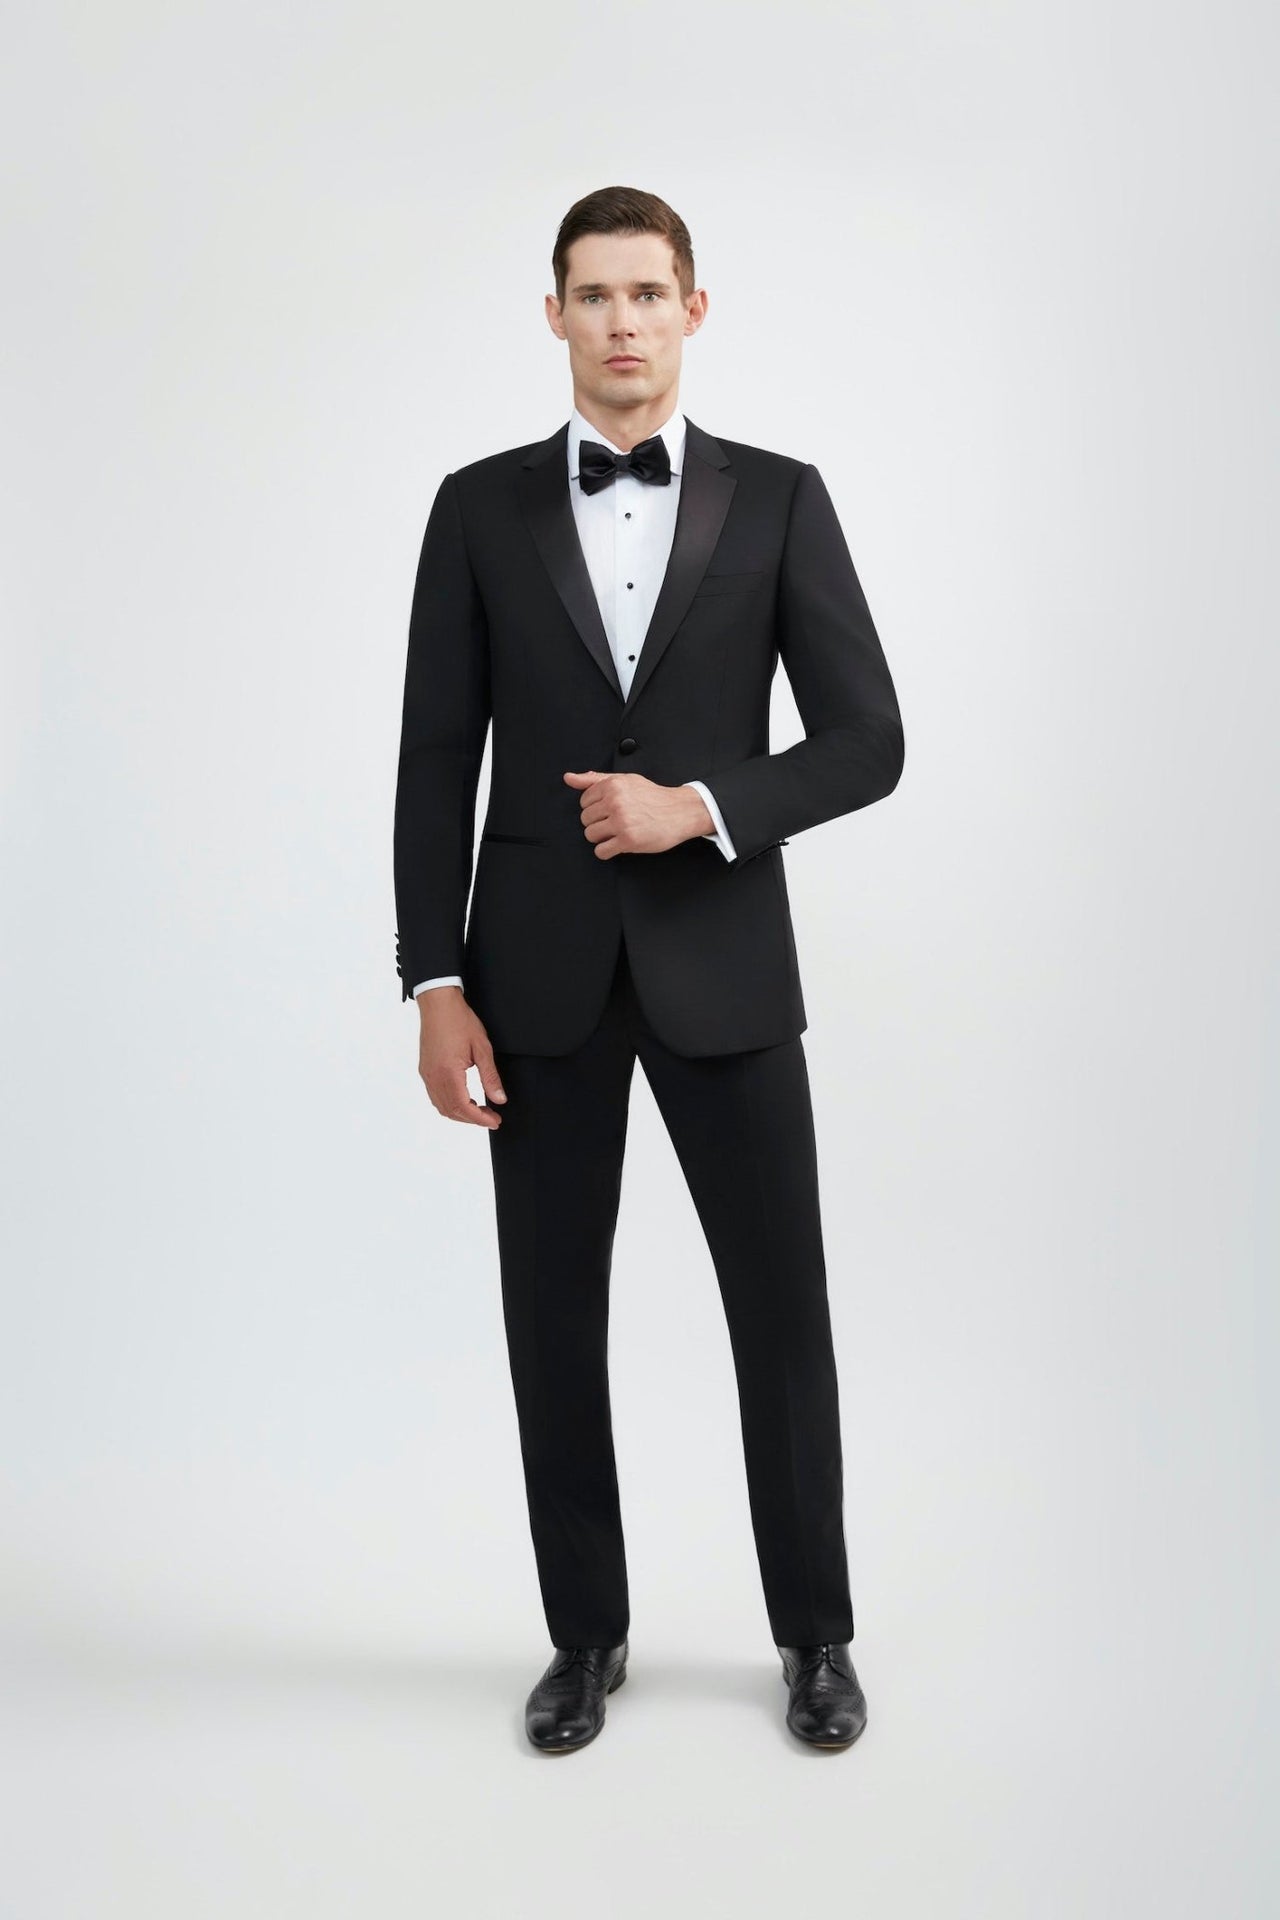 Luxurious Classic Black Tuxedo | Purchase an Elegant Italian Wool ...